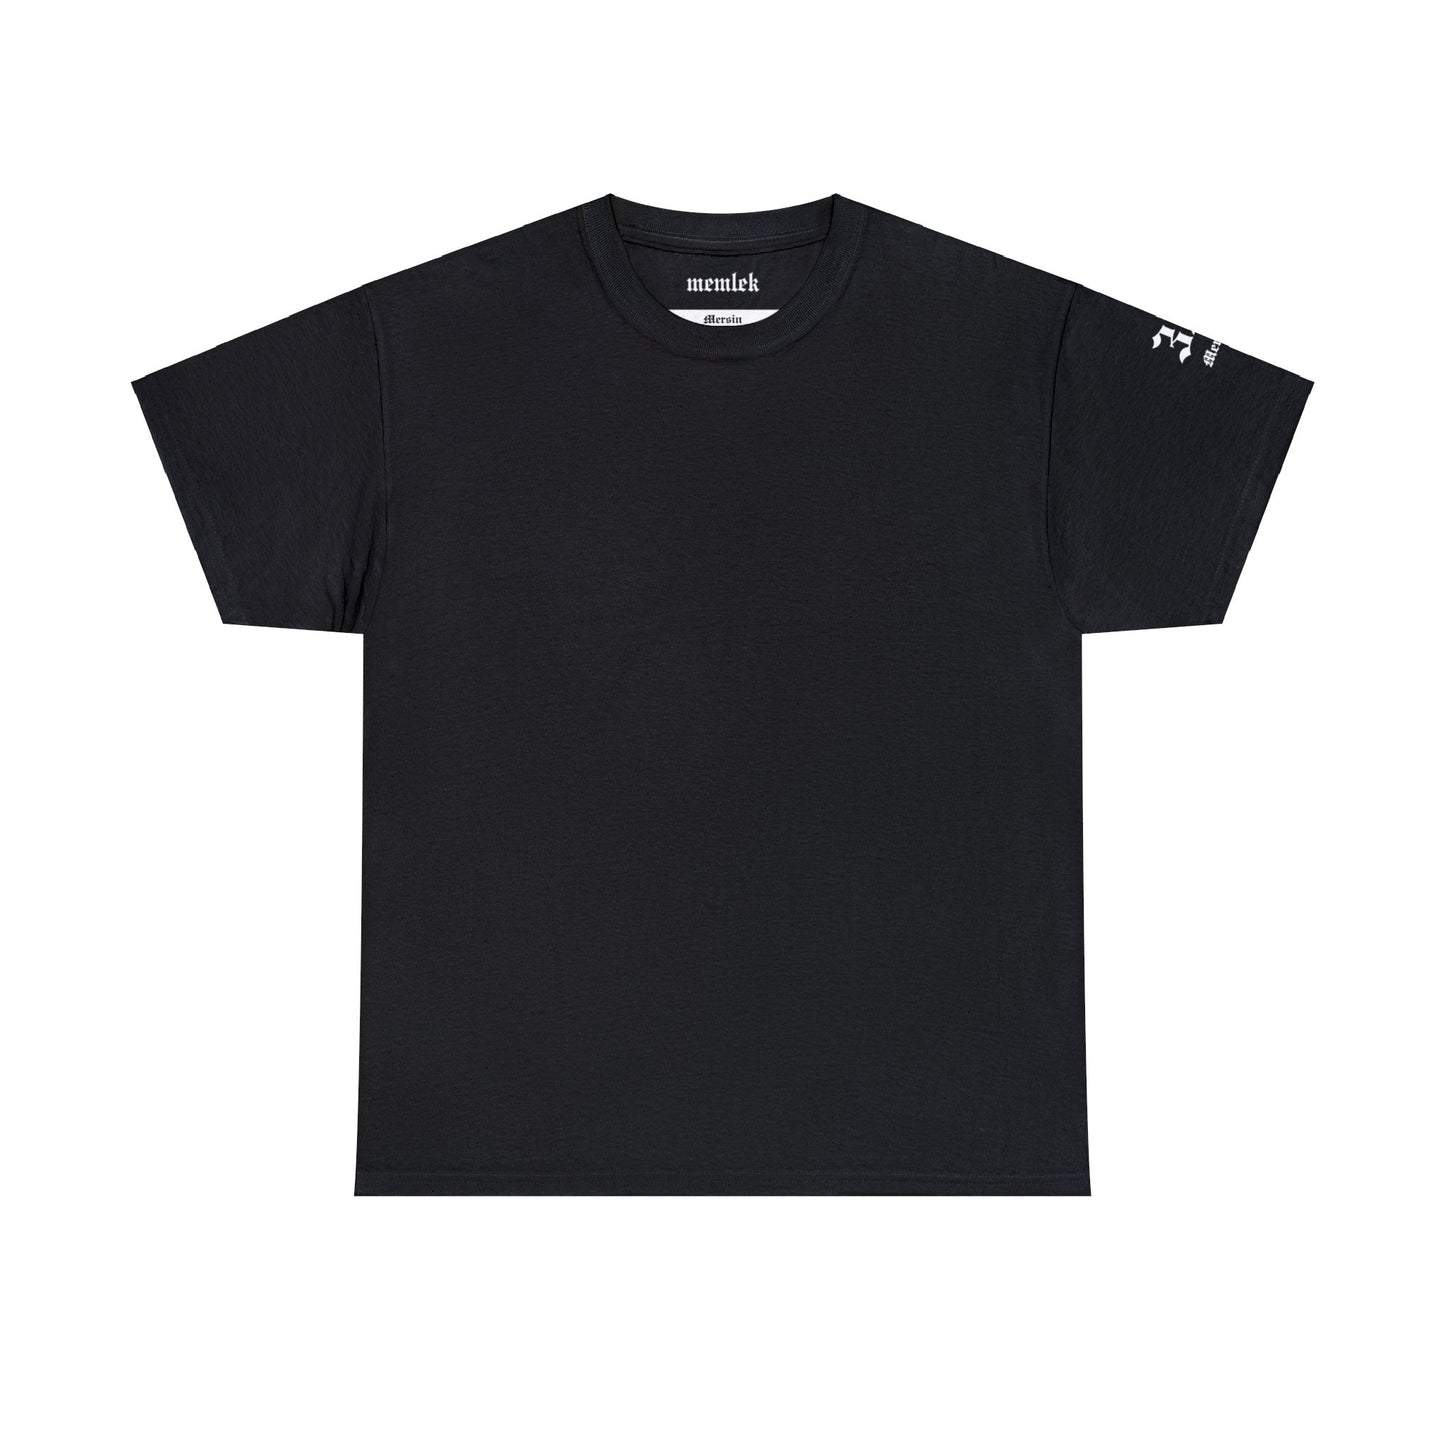 Şehirim - 33 Mersin - T-Shirt - Back Print - Black